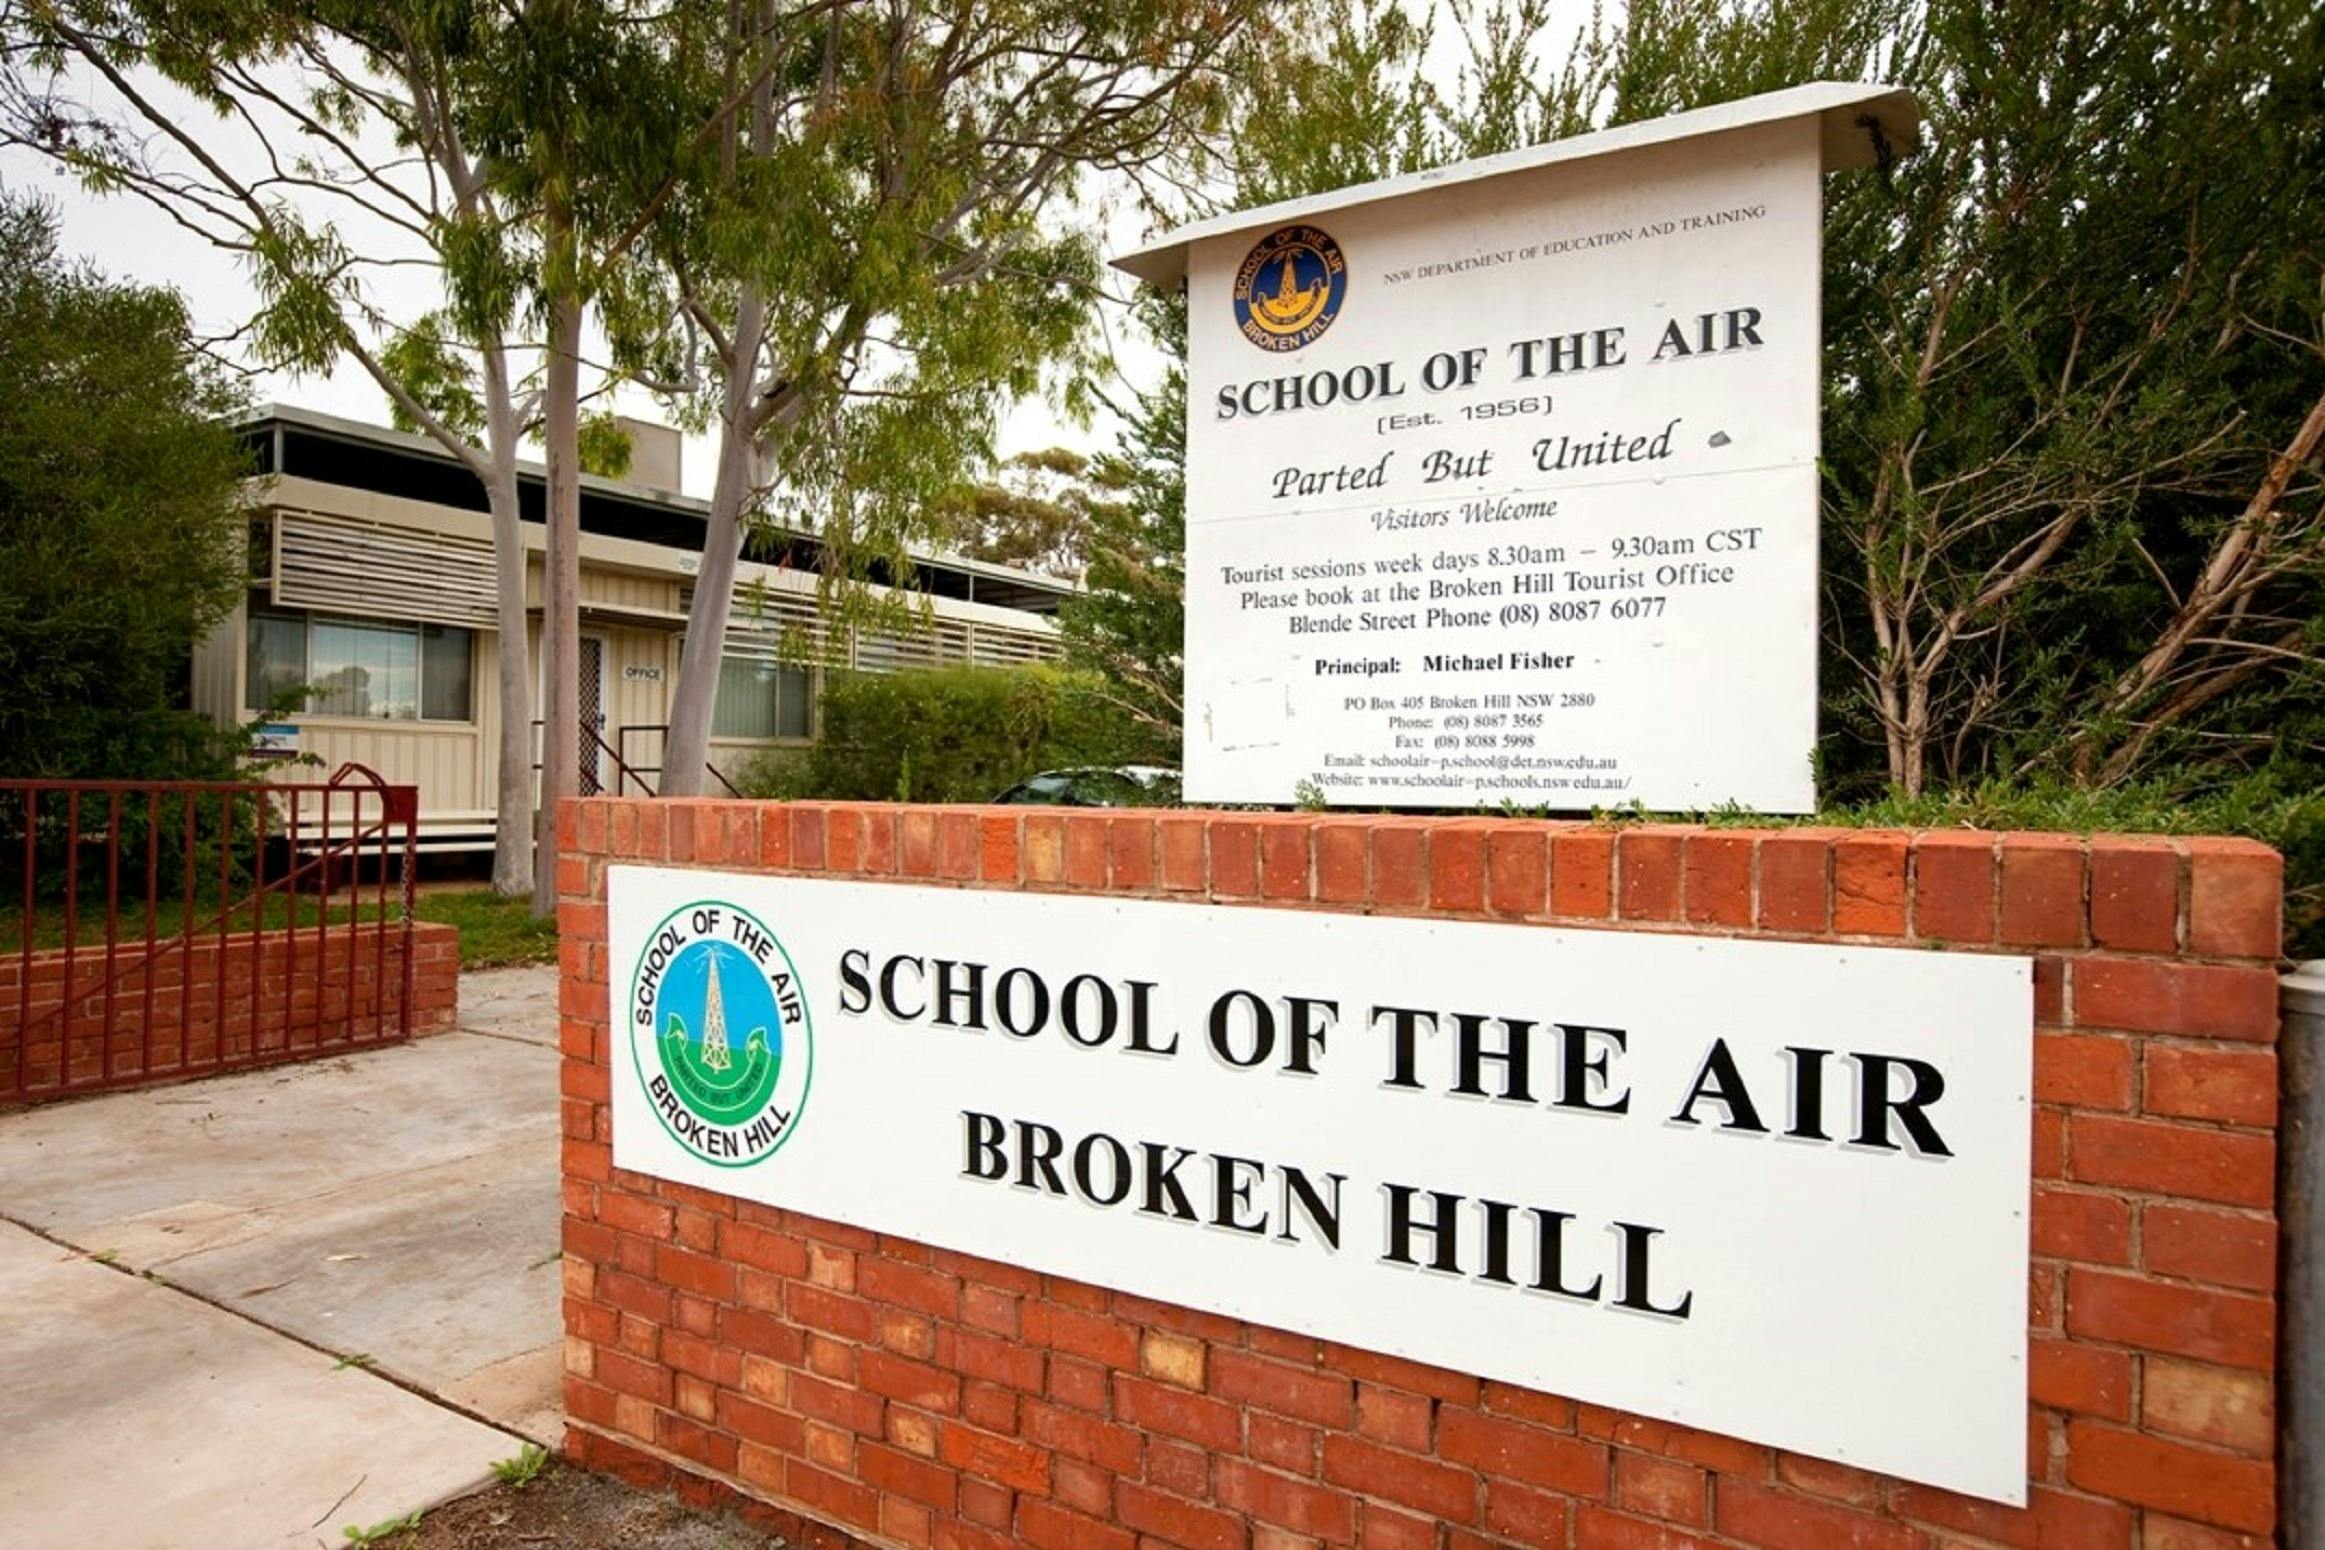 Холм школа. Брокен Хиллс. School of the Air. School of the Air текст. School of the Air in Australia.